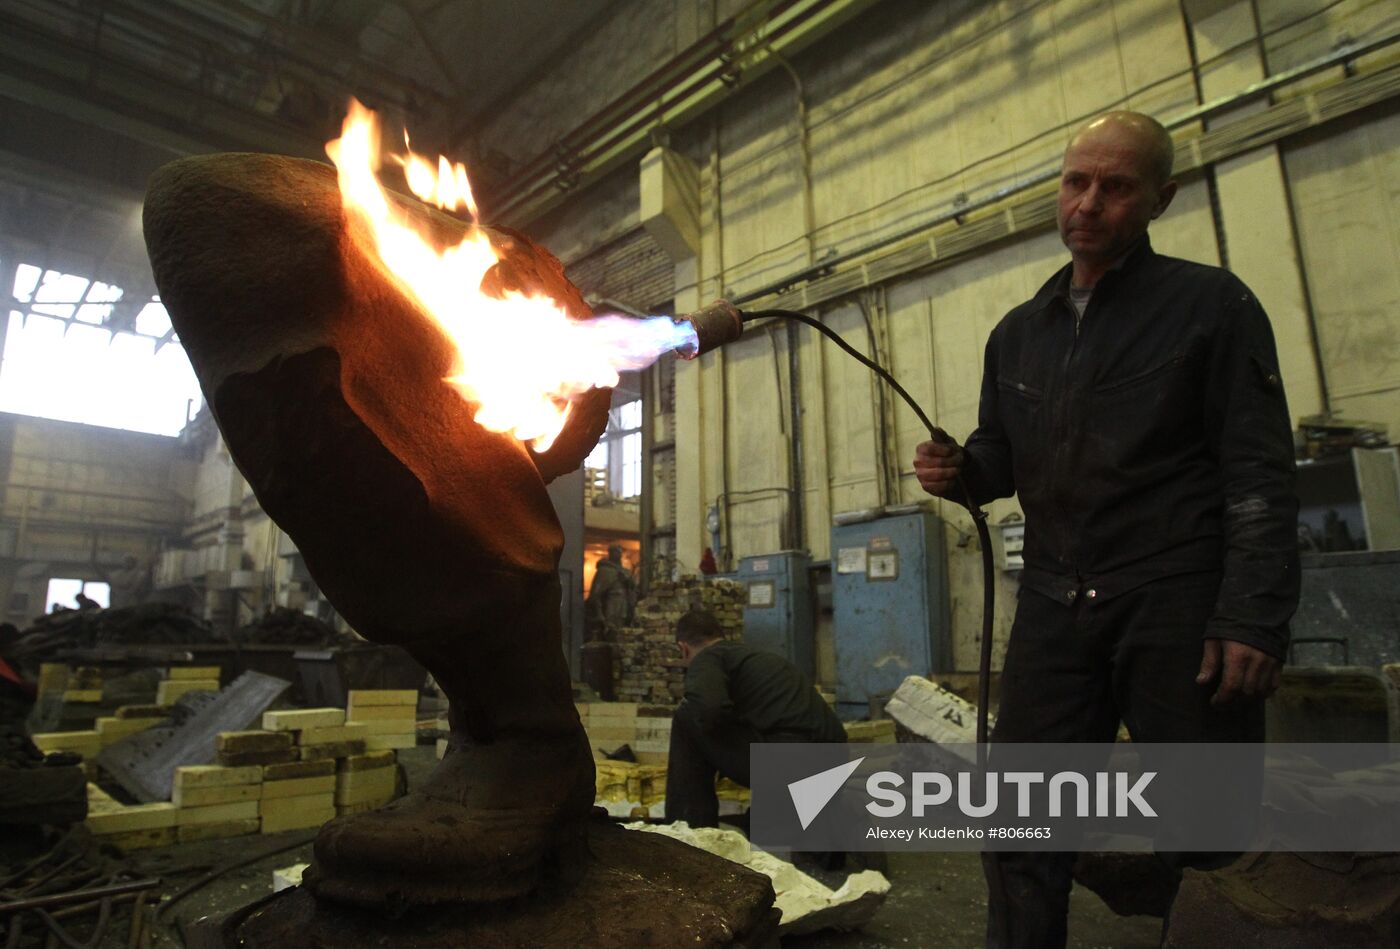 Lit-Art sculpture manufacturer's casting shop